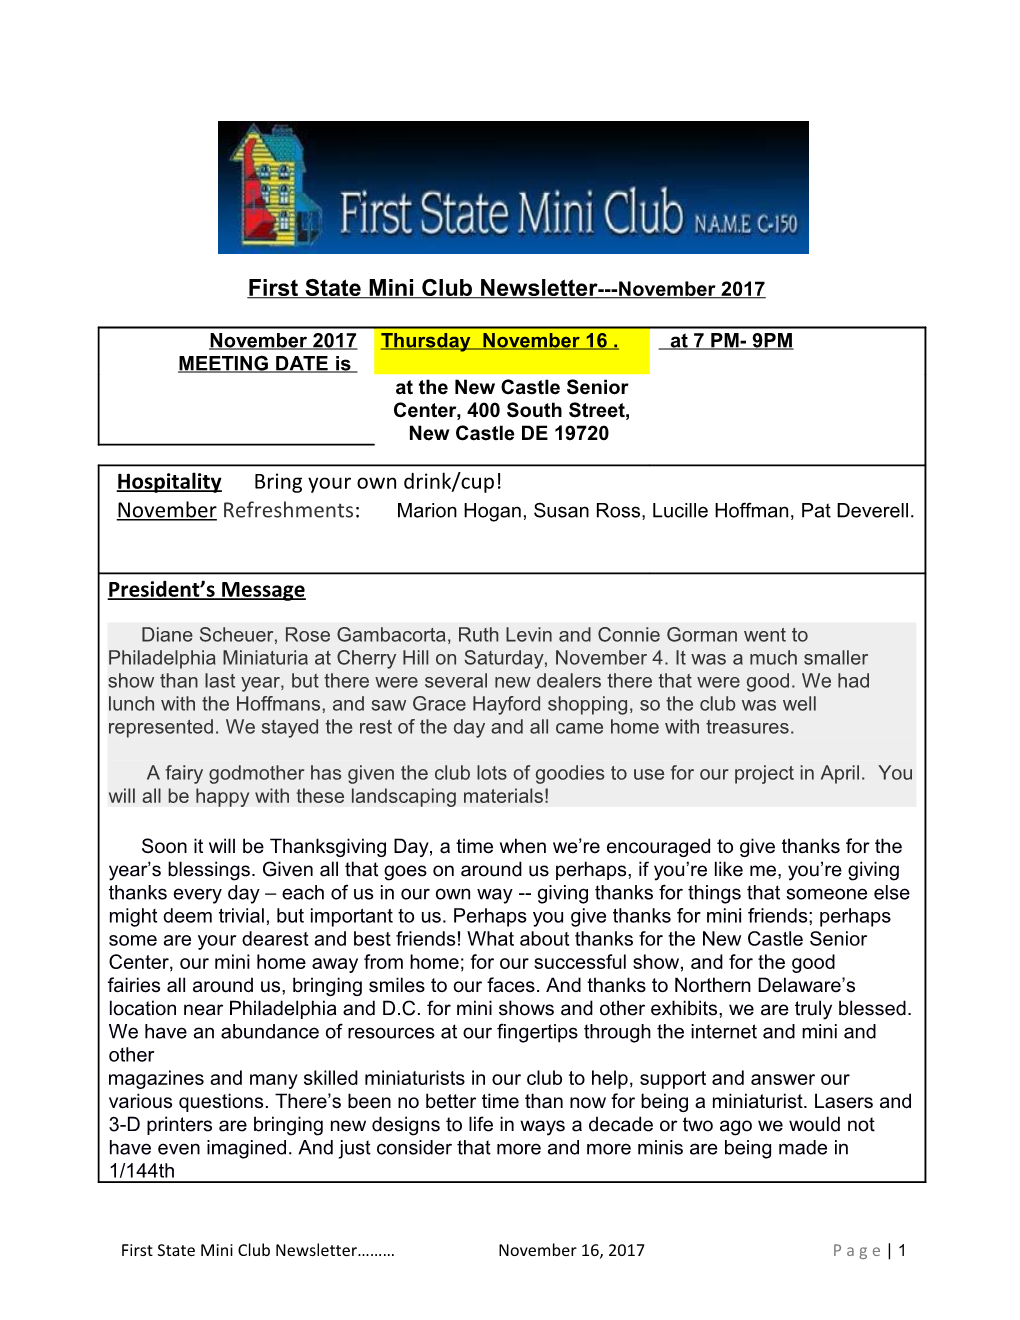 First State Mini Club Newsletter November 2017